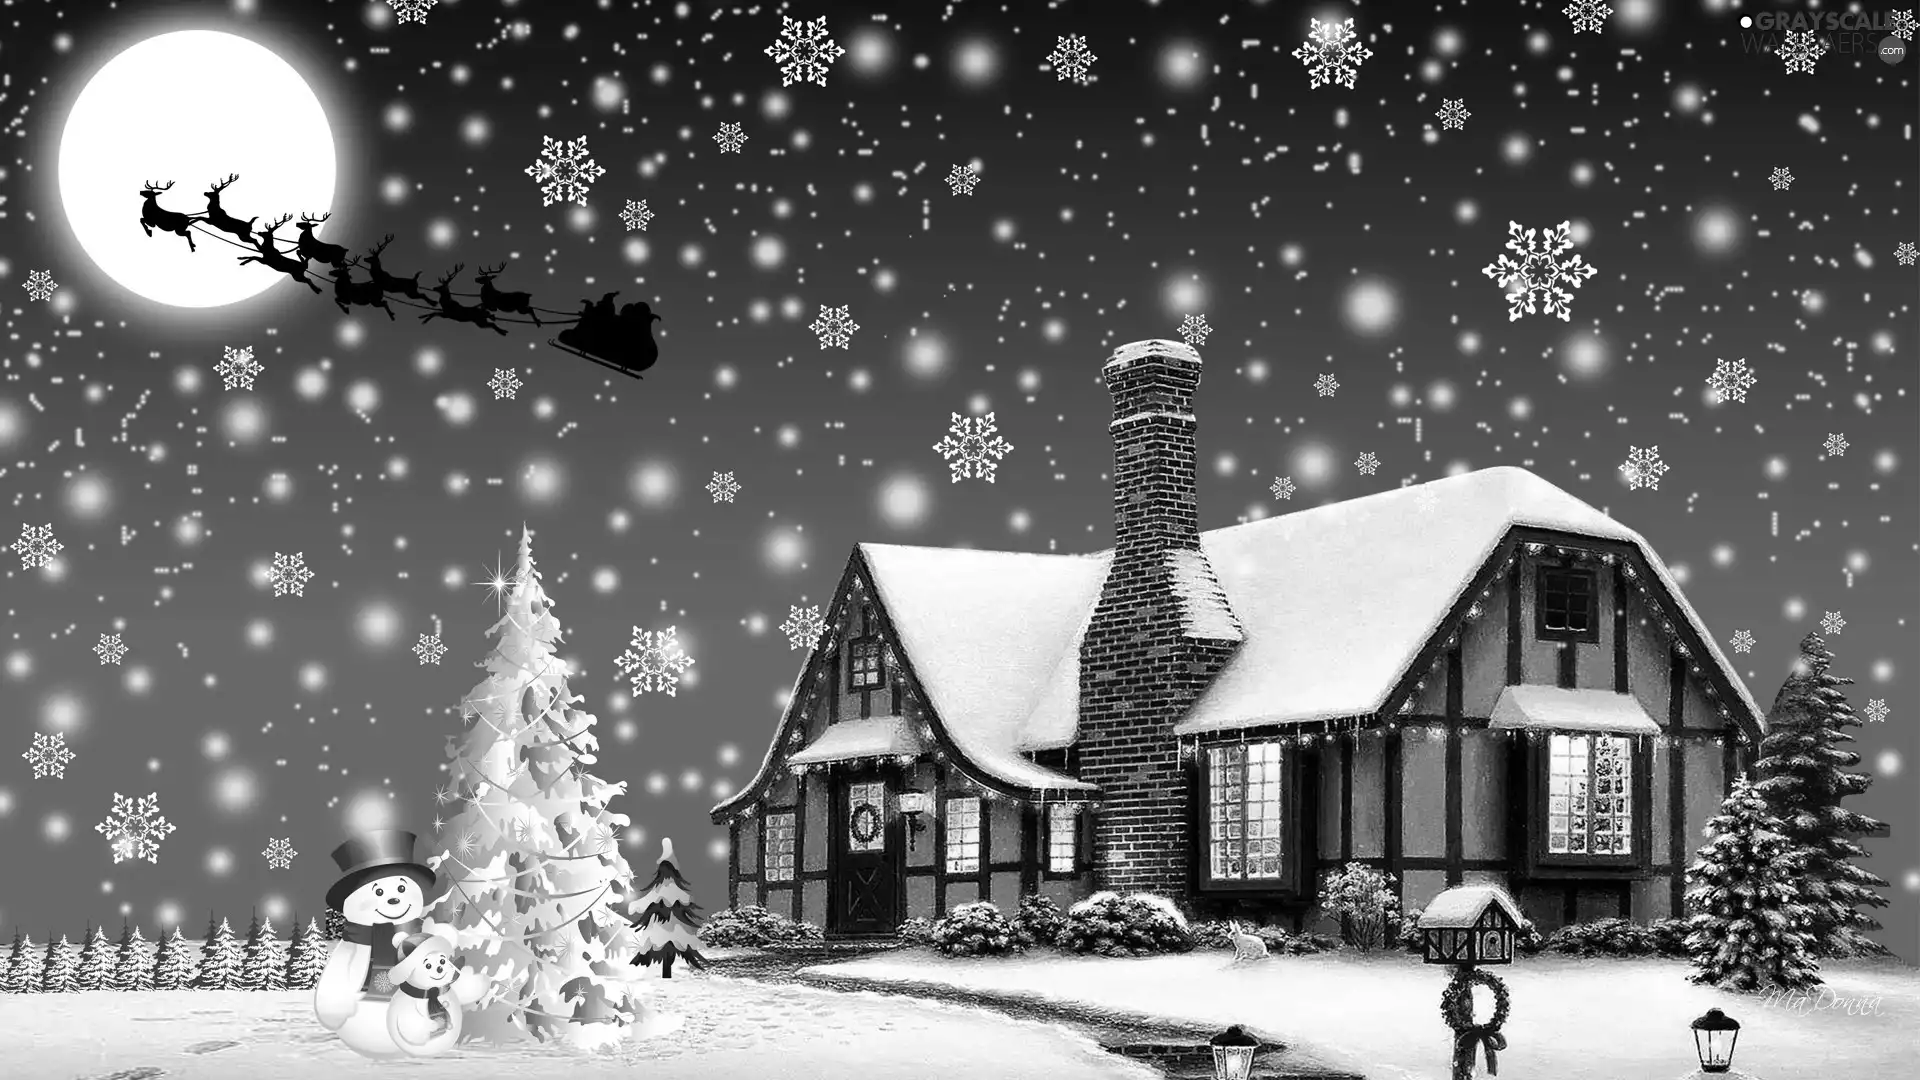 Night, Snowman, God, sleigh, house, winter, birth